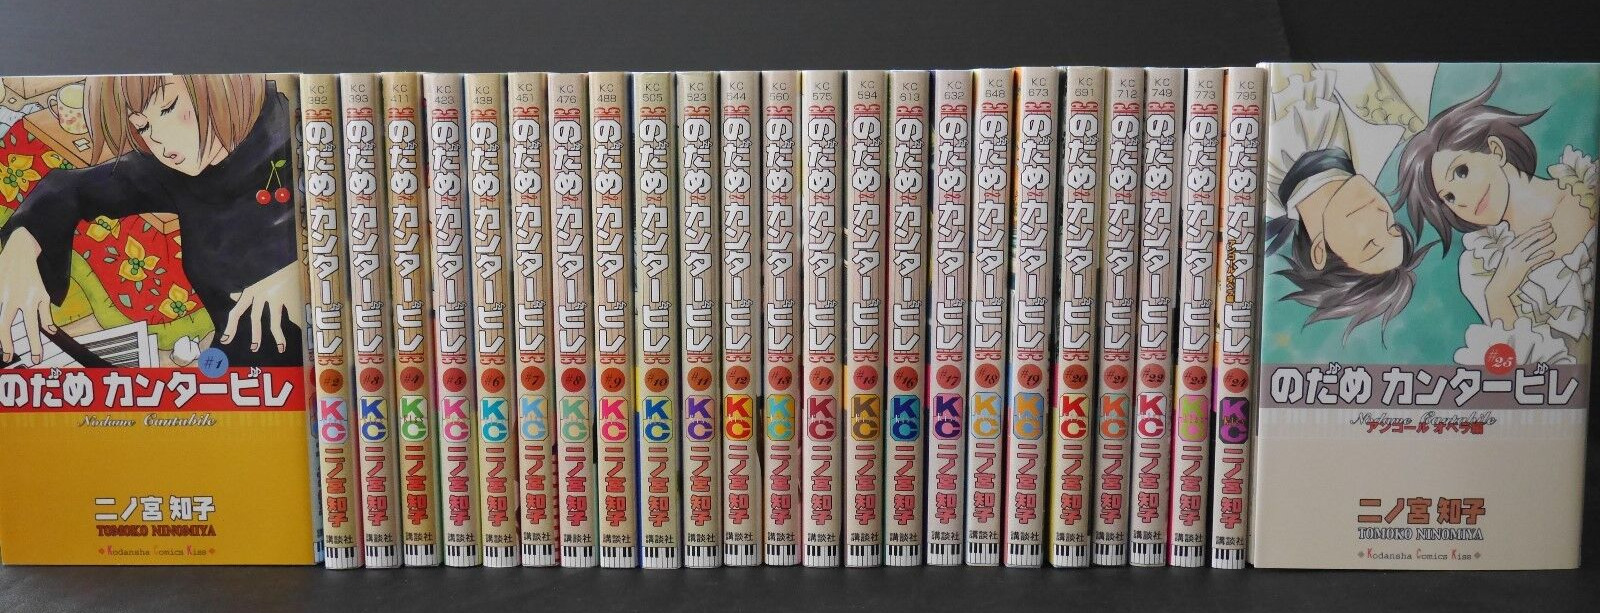 JAPAN Tomoko Ninomiya manga: Nodame Cantabile vol.1~25 Complete Set